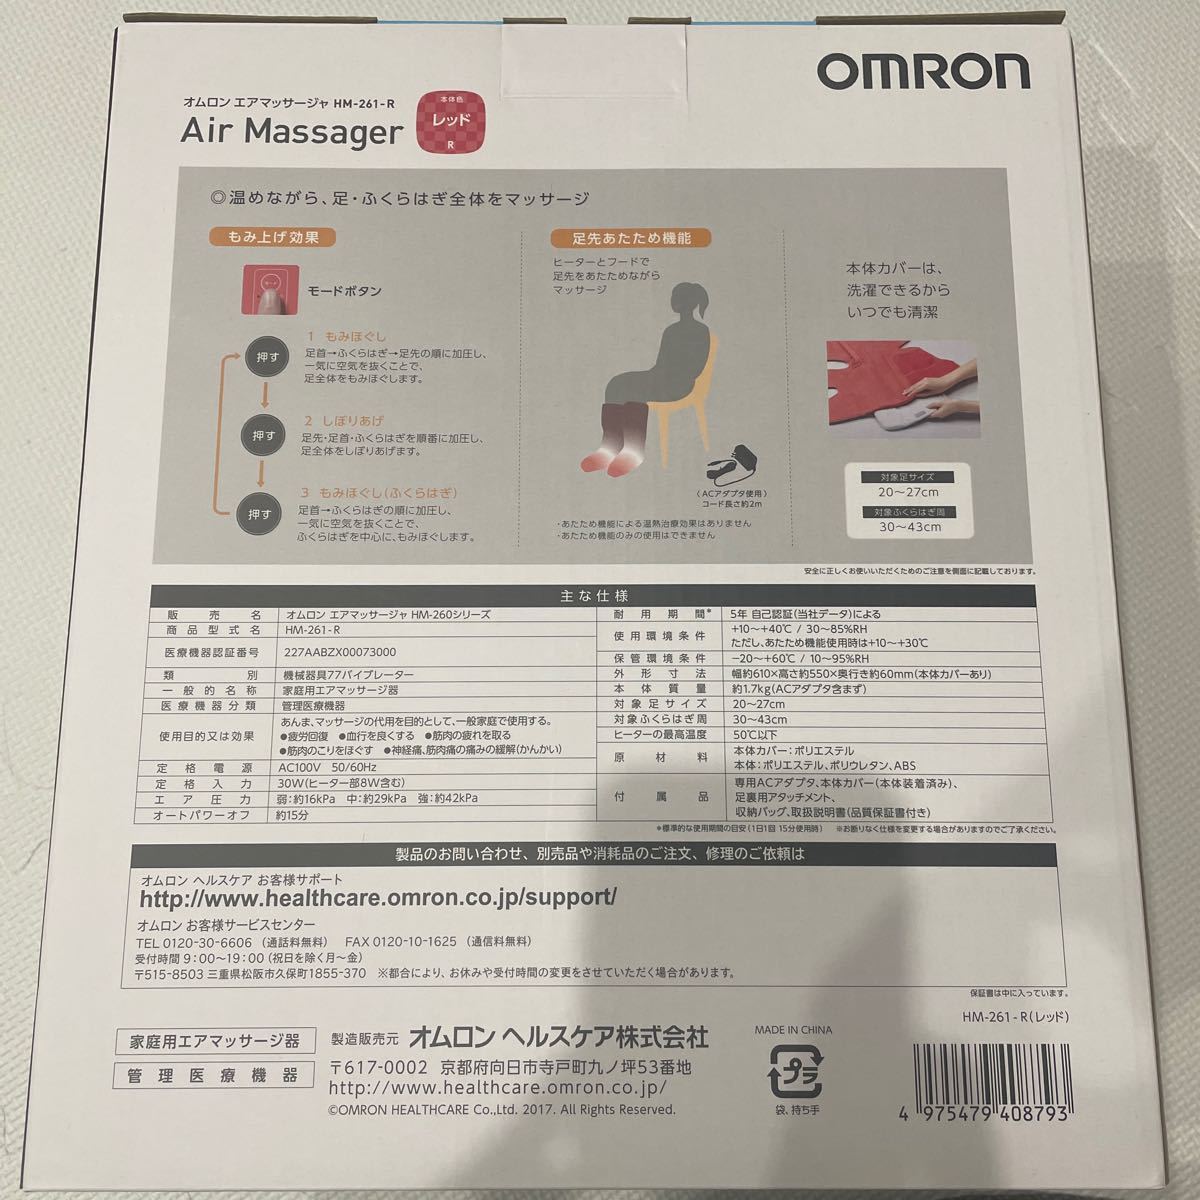 【OMRON】 エアマッサージャ HM-261-R